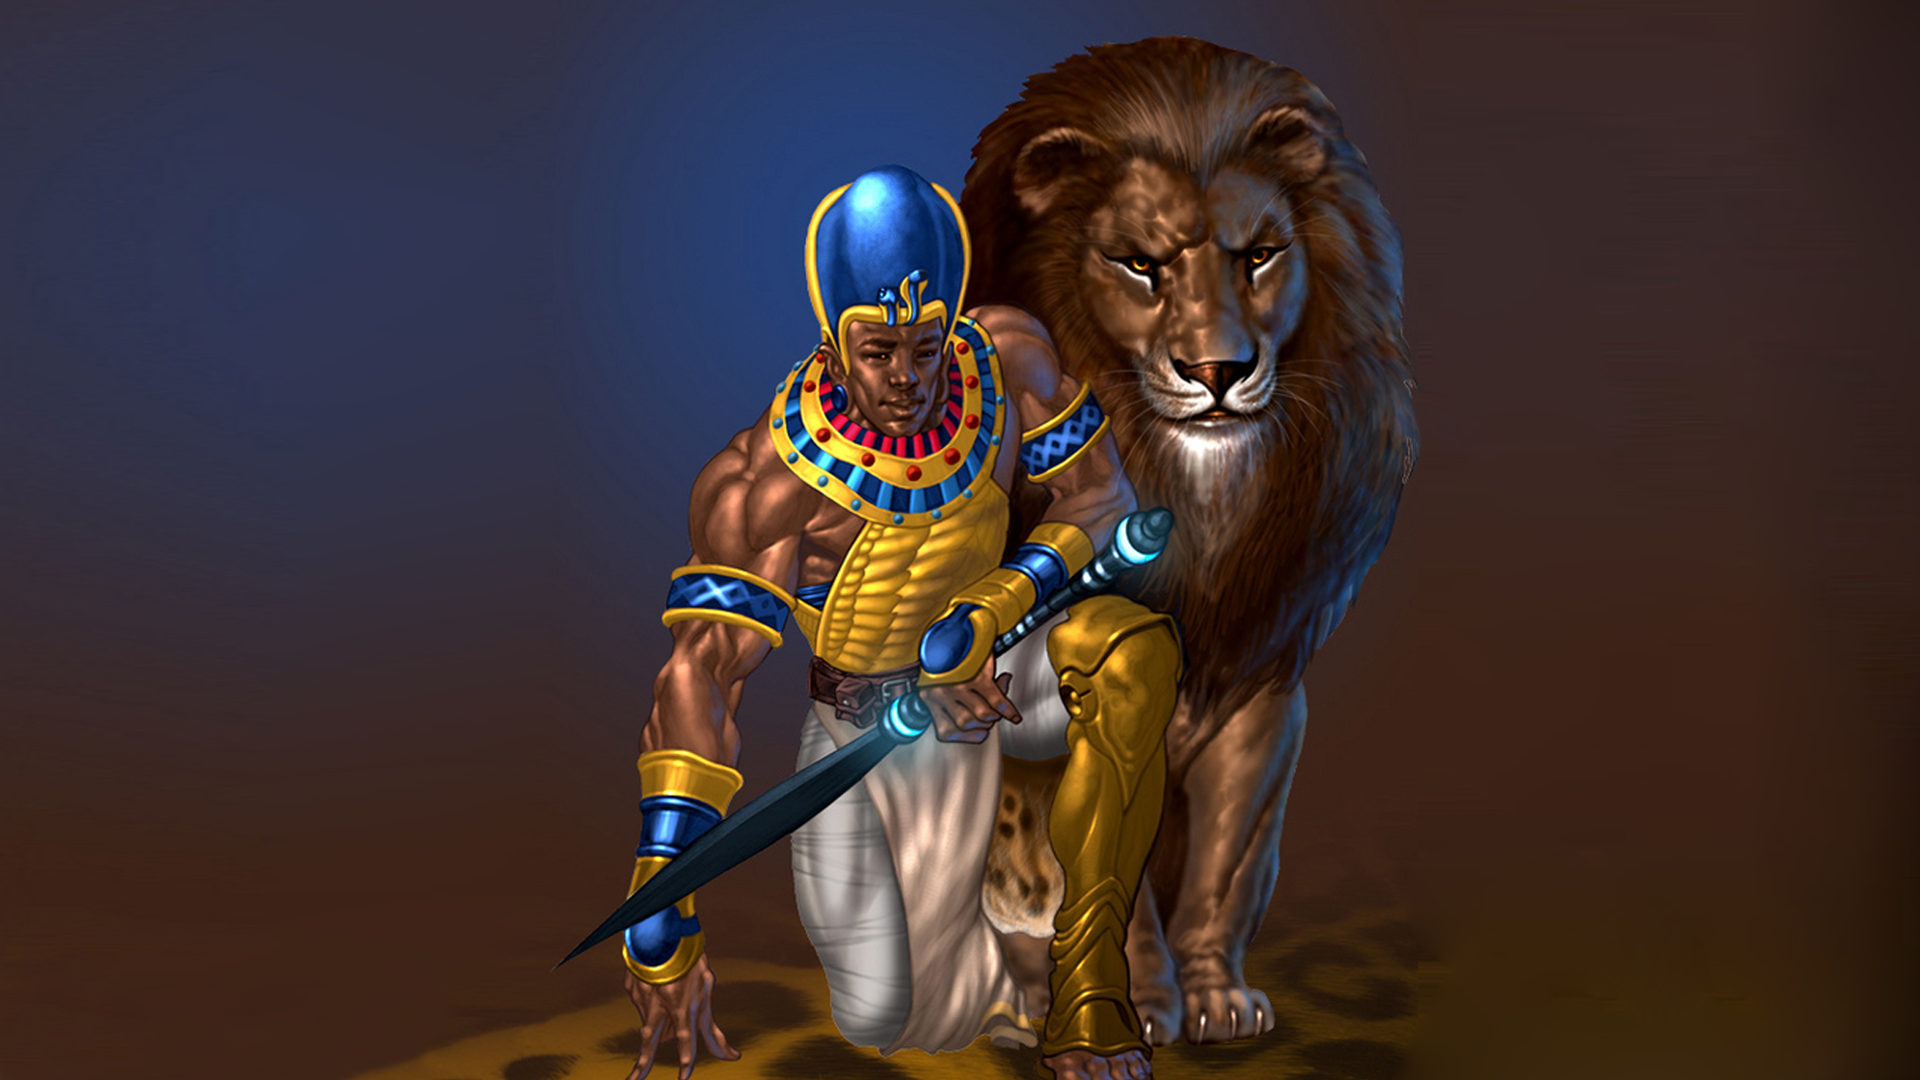 Jaycen Wise Immortal Warrior Scholar Golden Age Of Antiquity He Was The Last Son Of An African Empire Of Kush HD Desktop Wallpaper 1920x1200, Wallpaper13.com